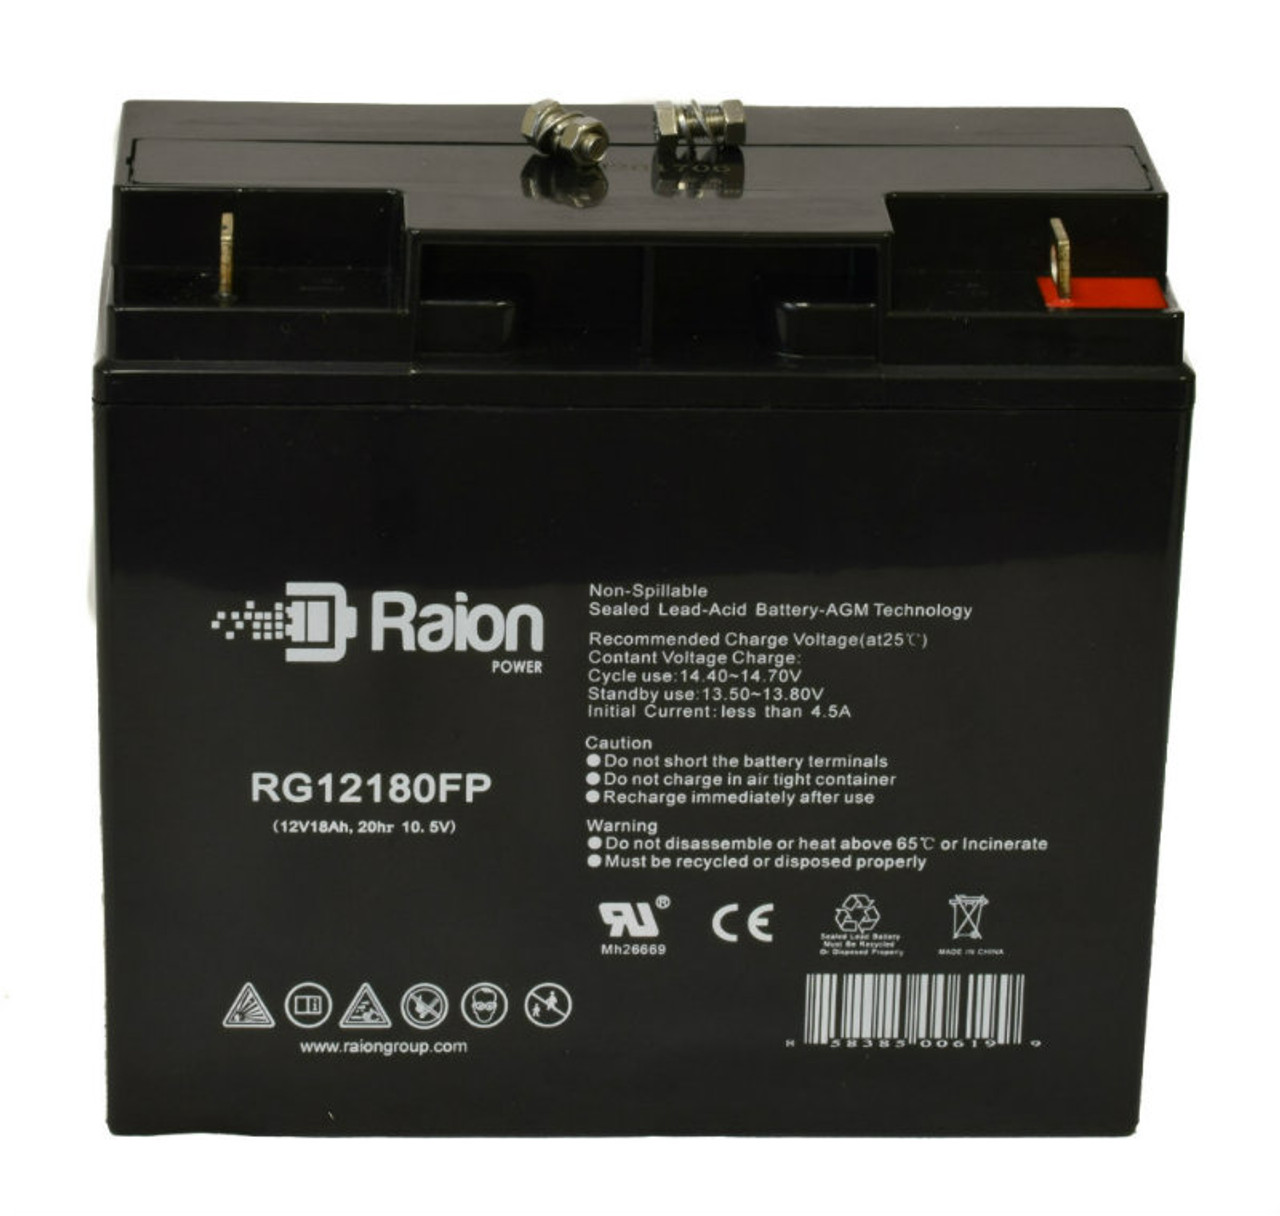 Raion Power RG12180FP 12V 18Ah Lead Acid Battery for Kypro Viaggio